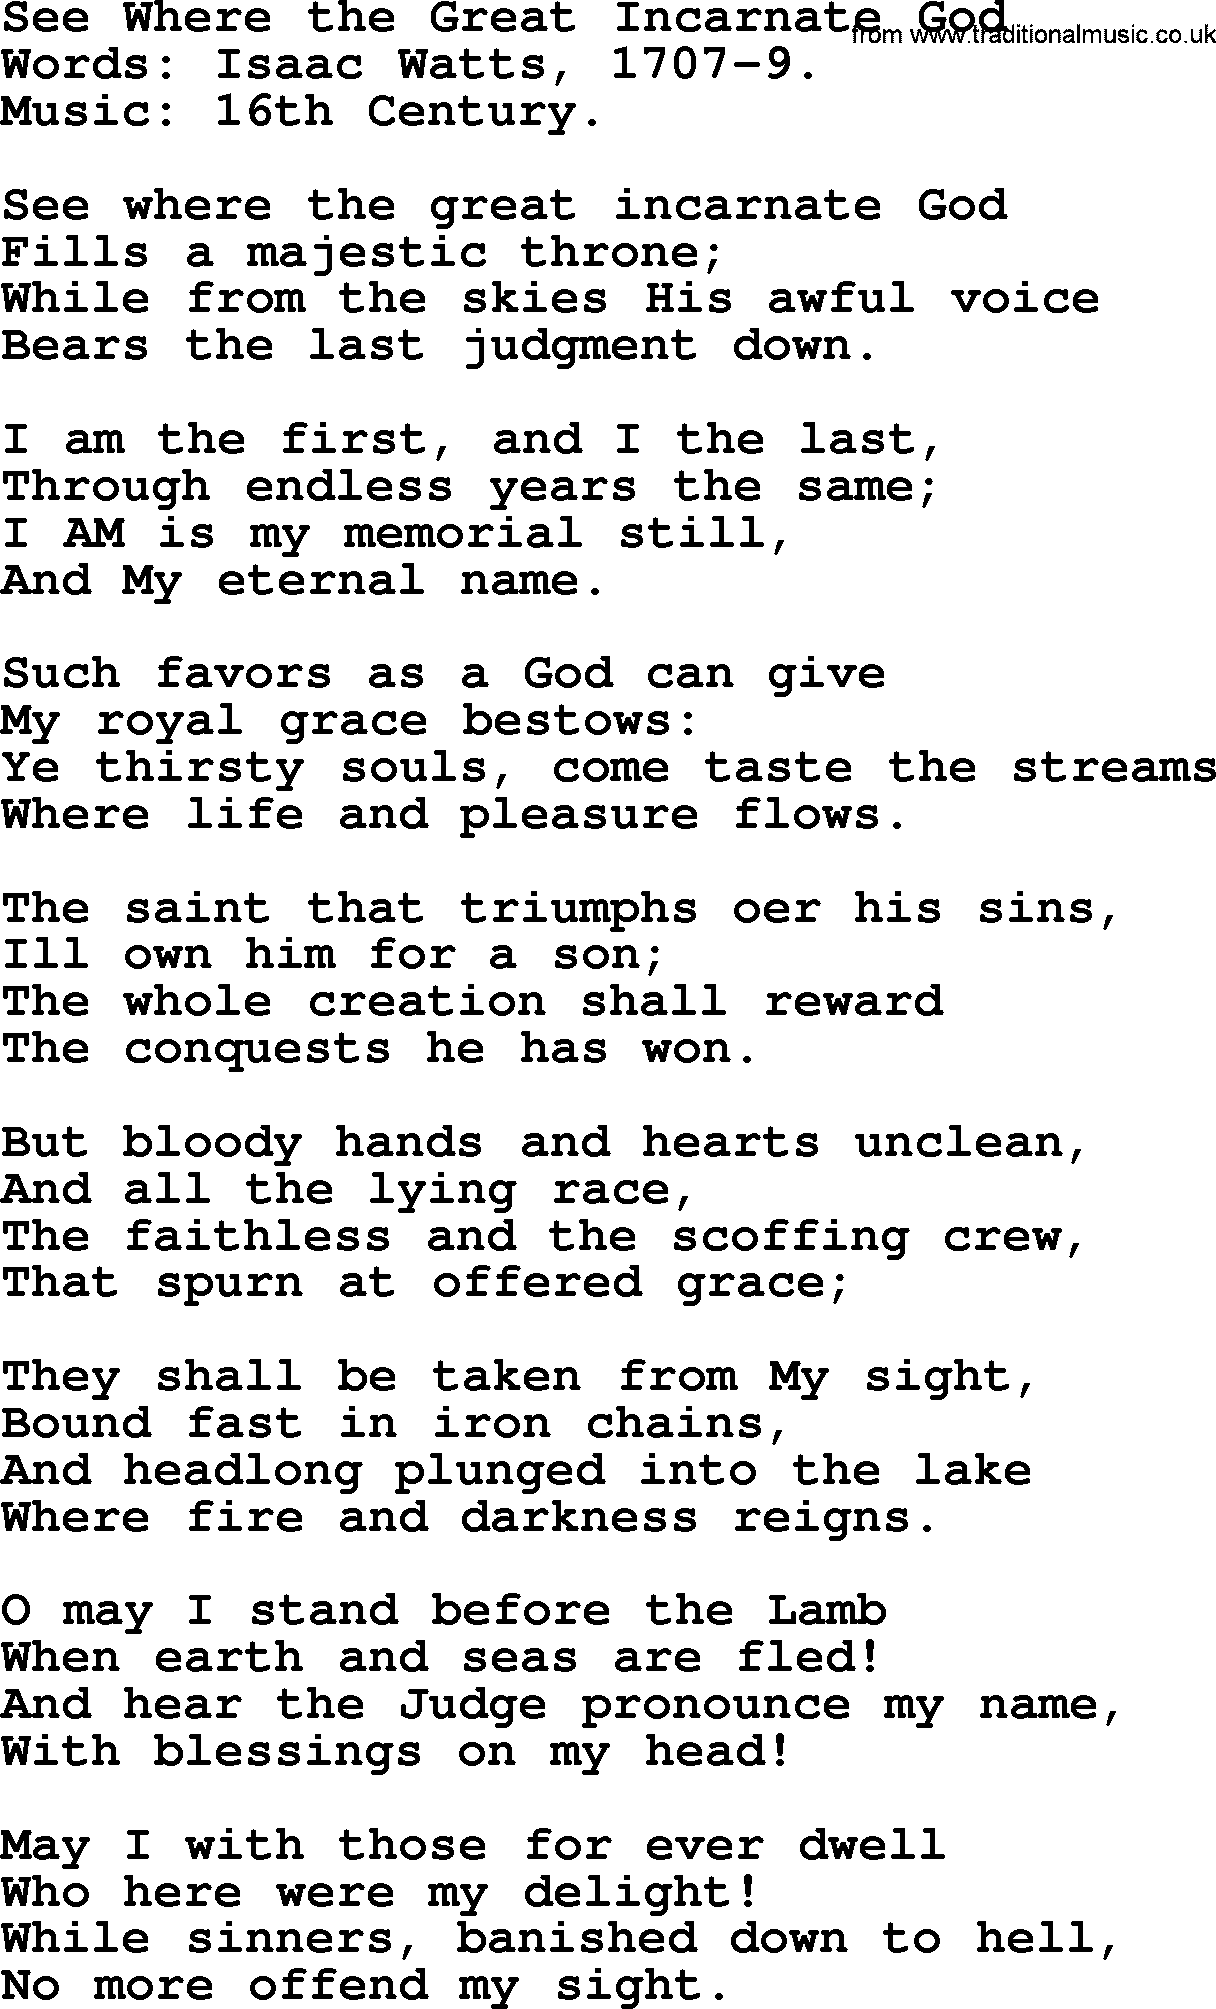 Isaac Watts Christian hymn: See Where the Great Incarnate God- lyricss